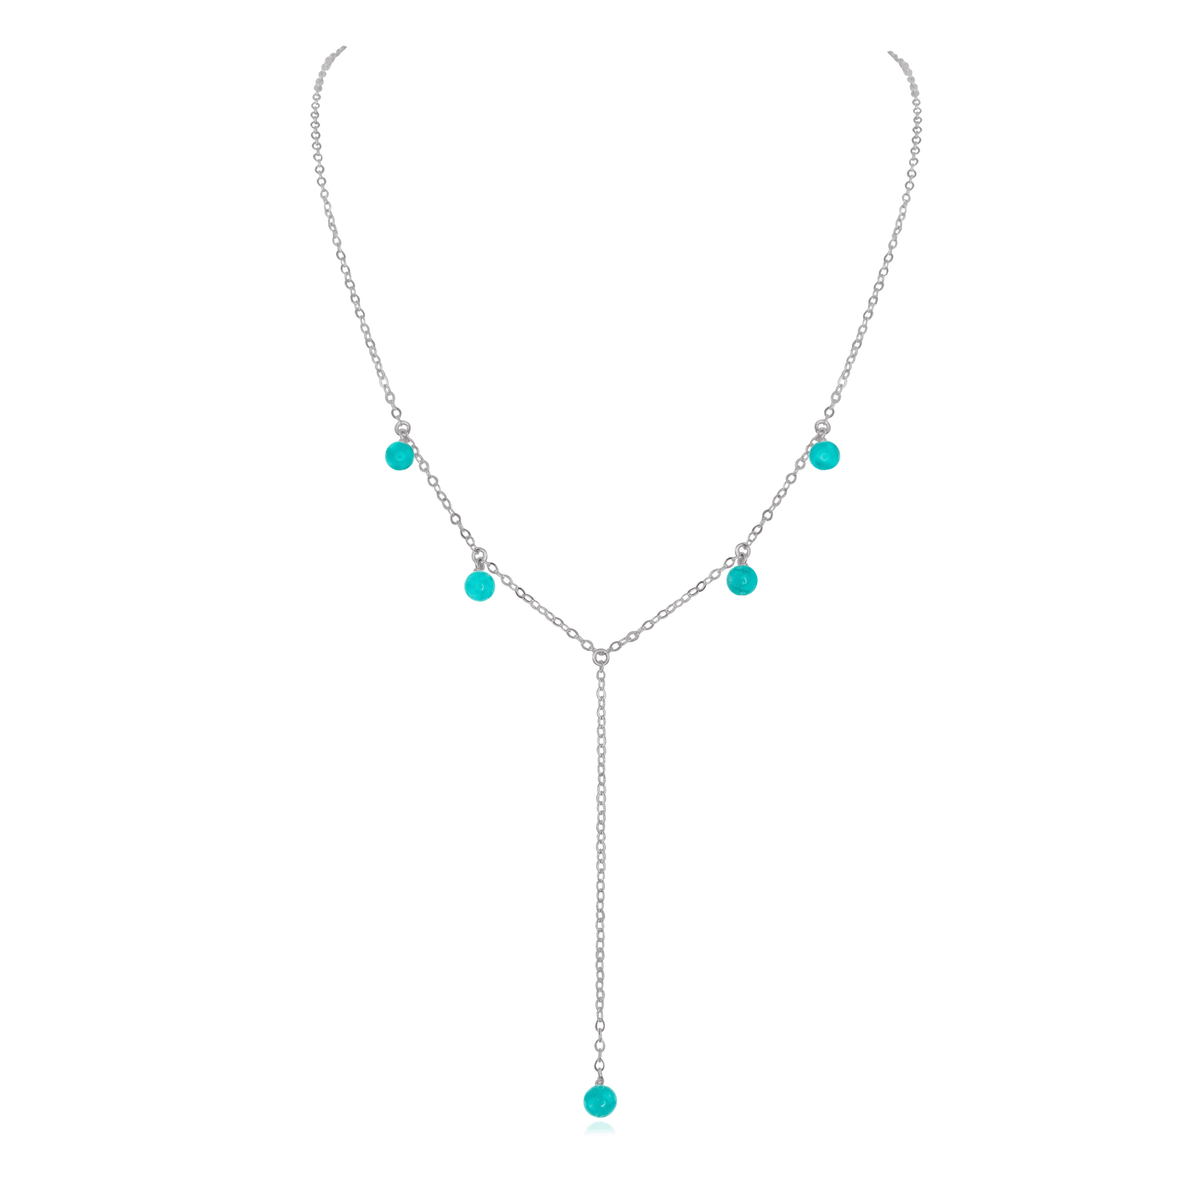 Turquoise Boho Lariat Necklace - Turquoise Boho Lariat Necklace - Stainless Steel - Luna Tide Handmade Crystal Jewellery